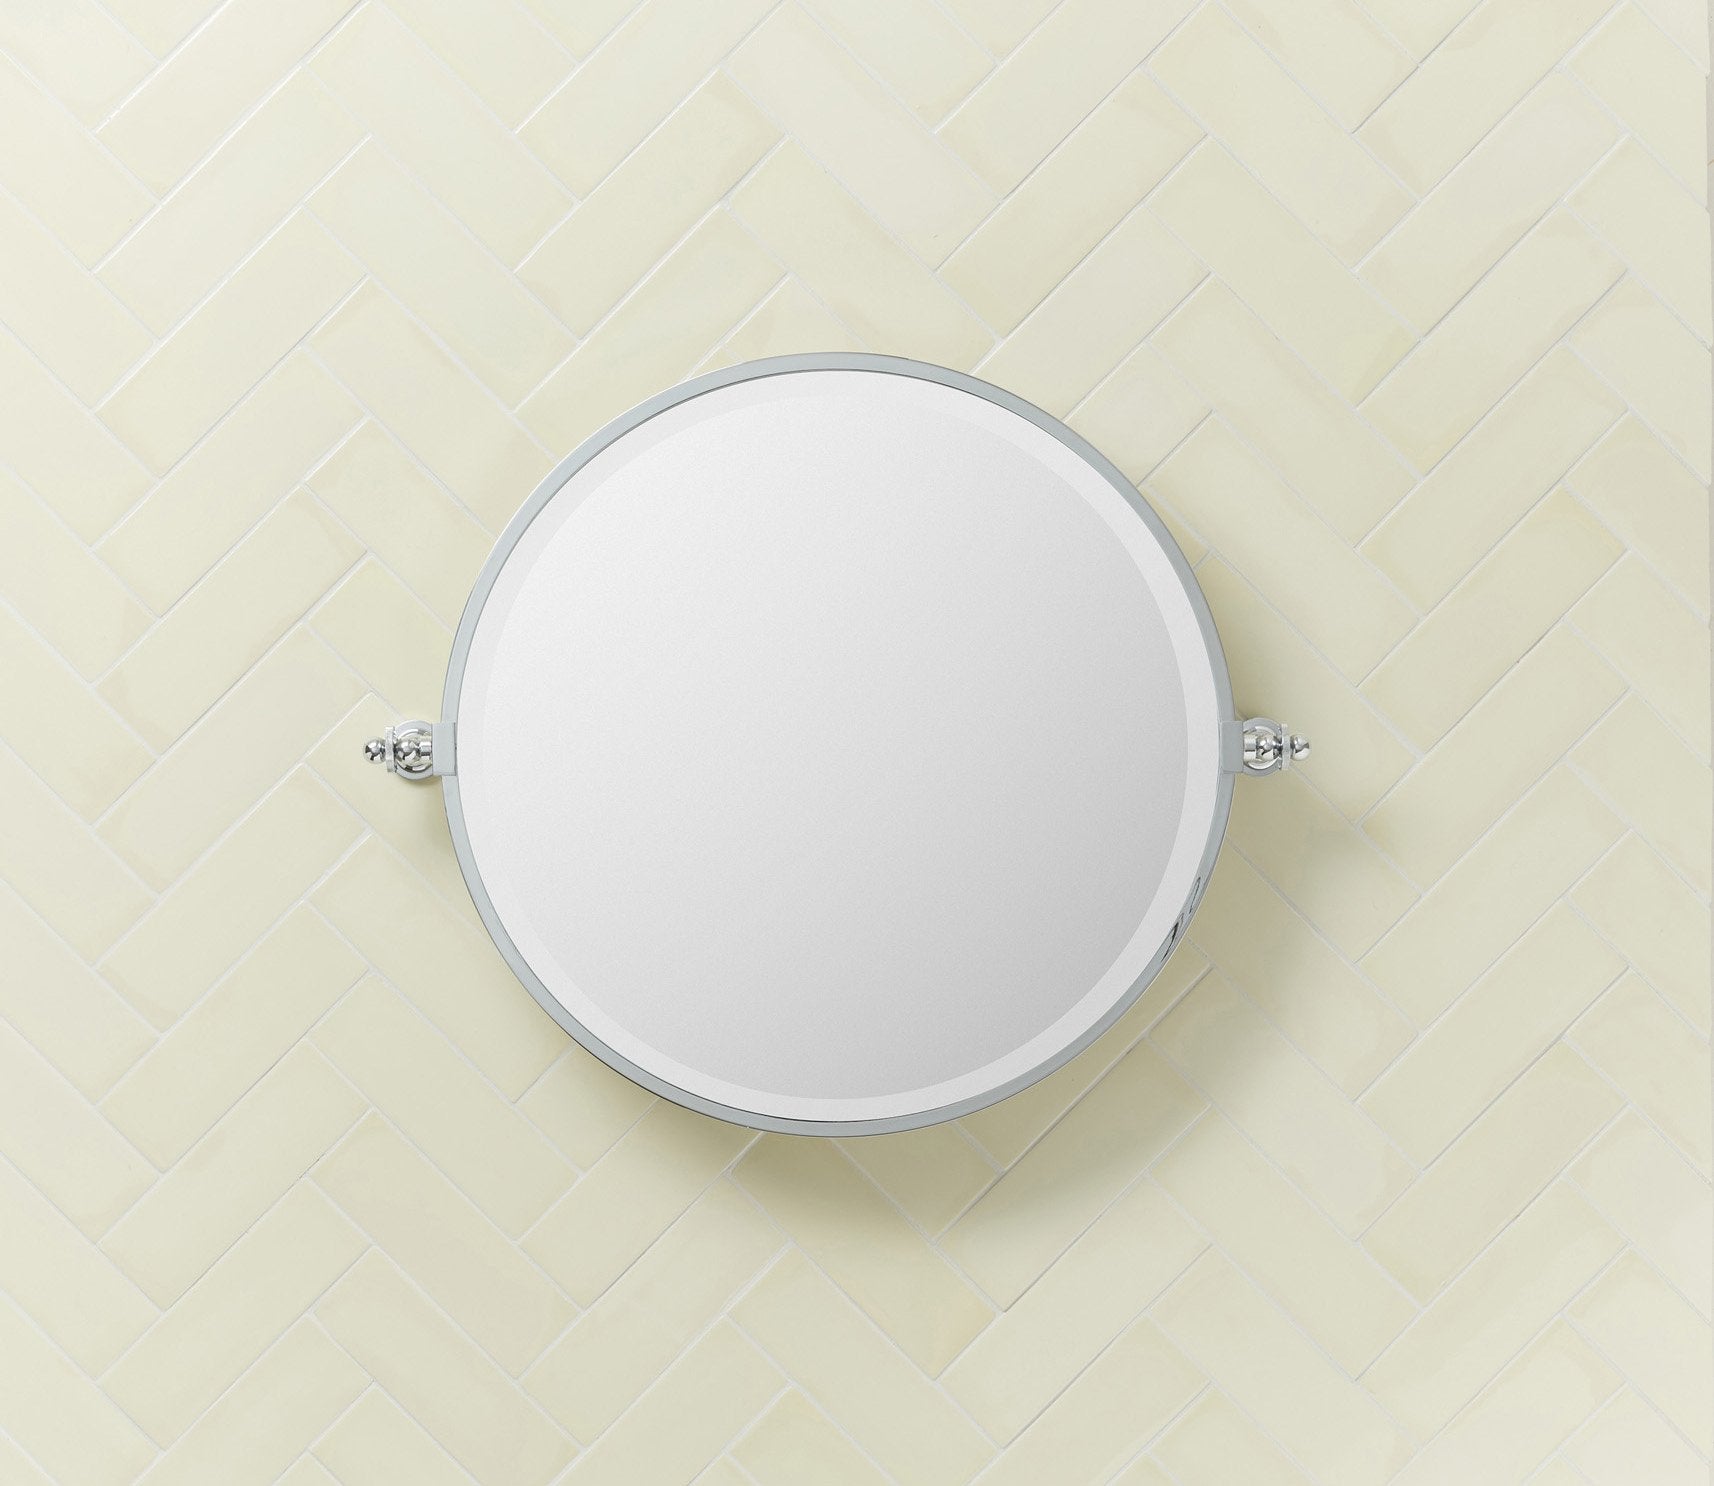 Hanbury Round Mirror Product Image 2